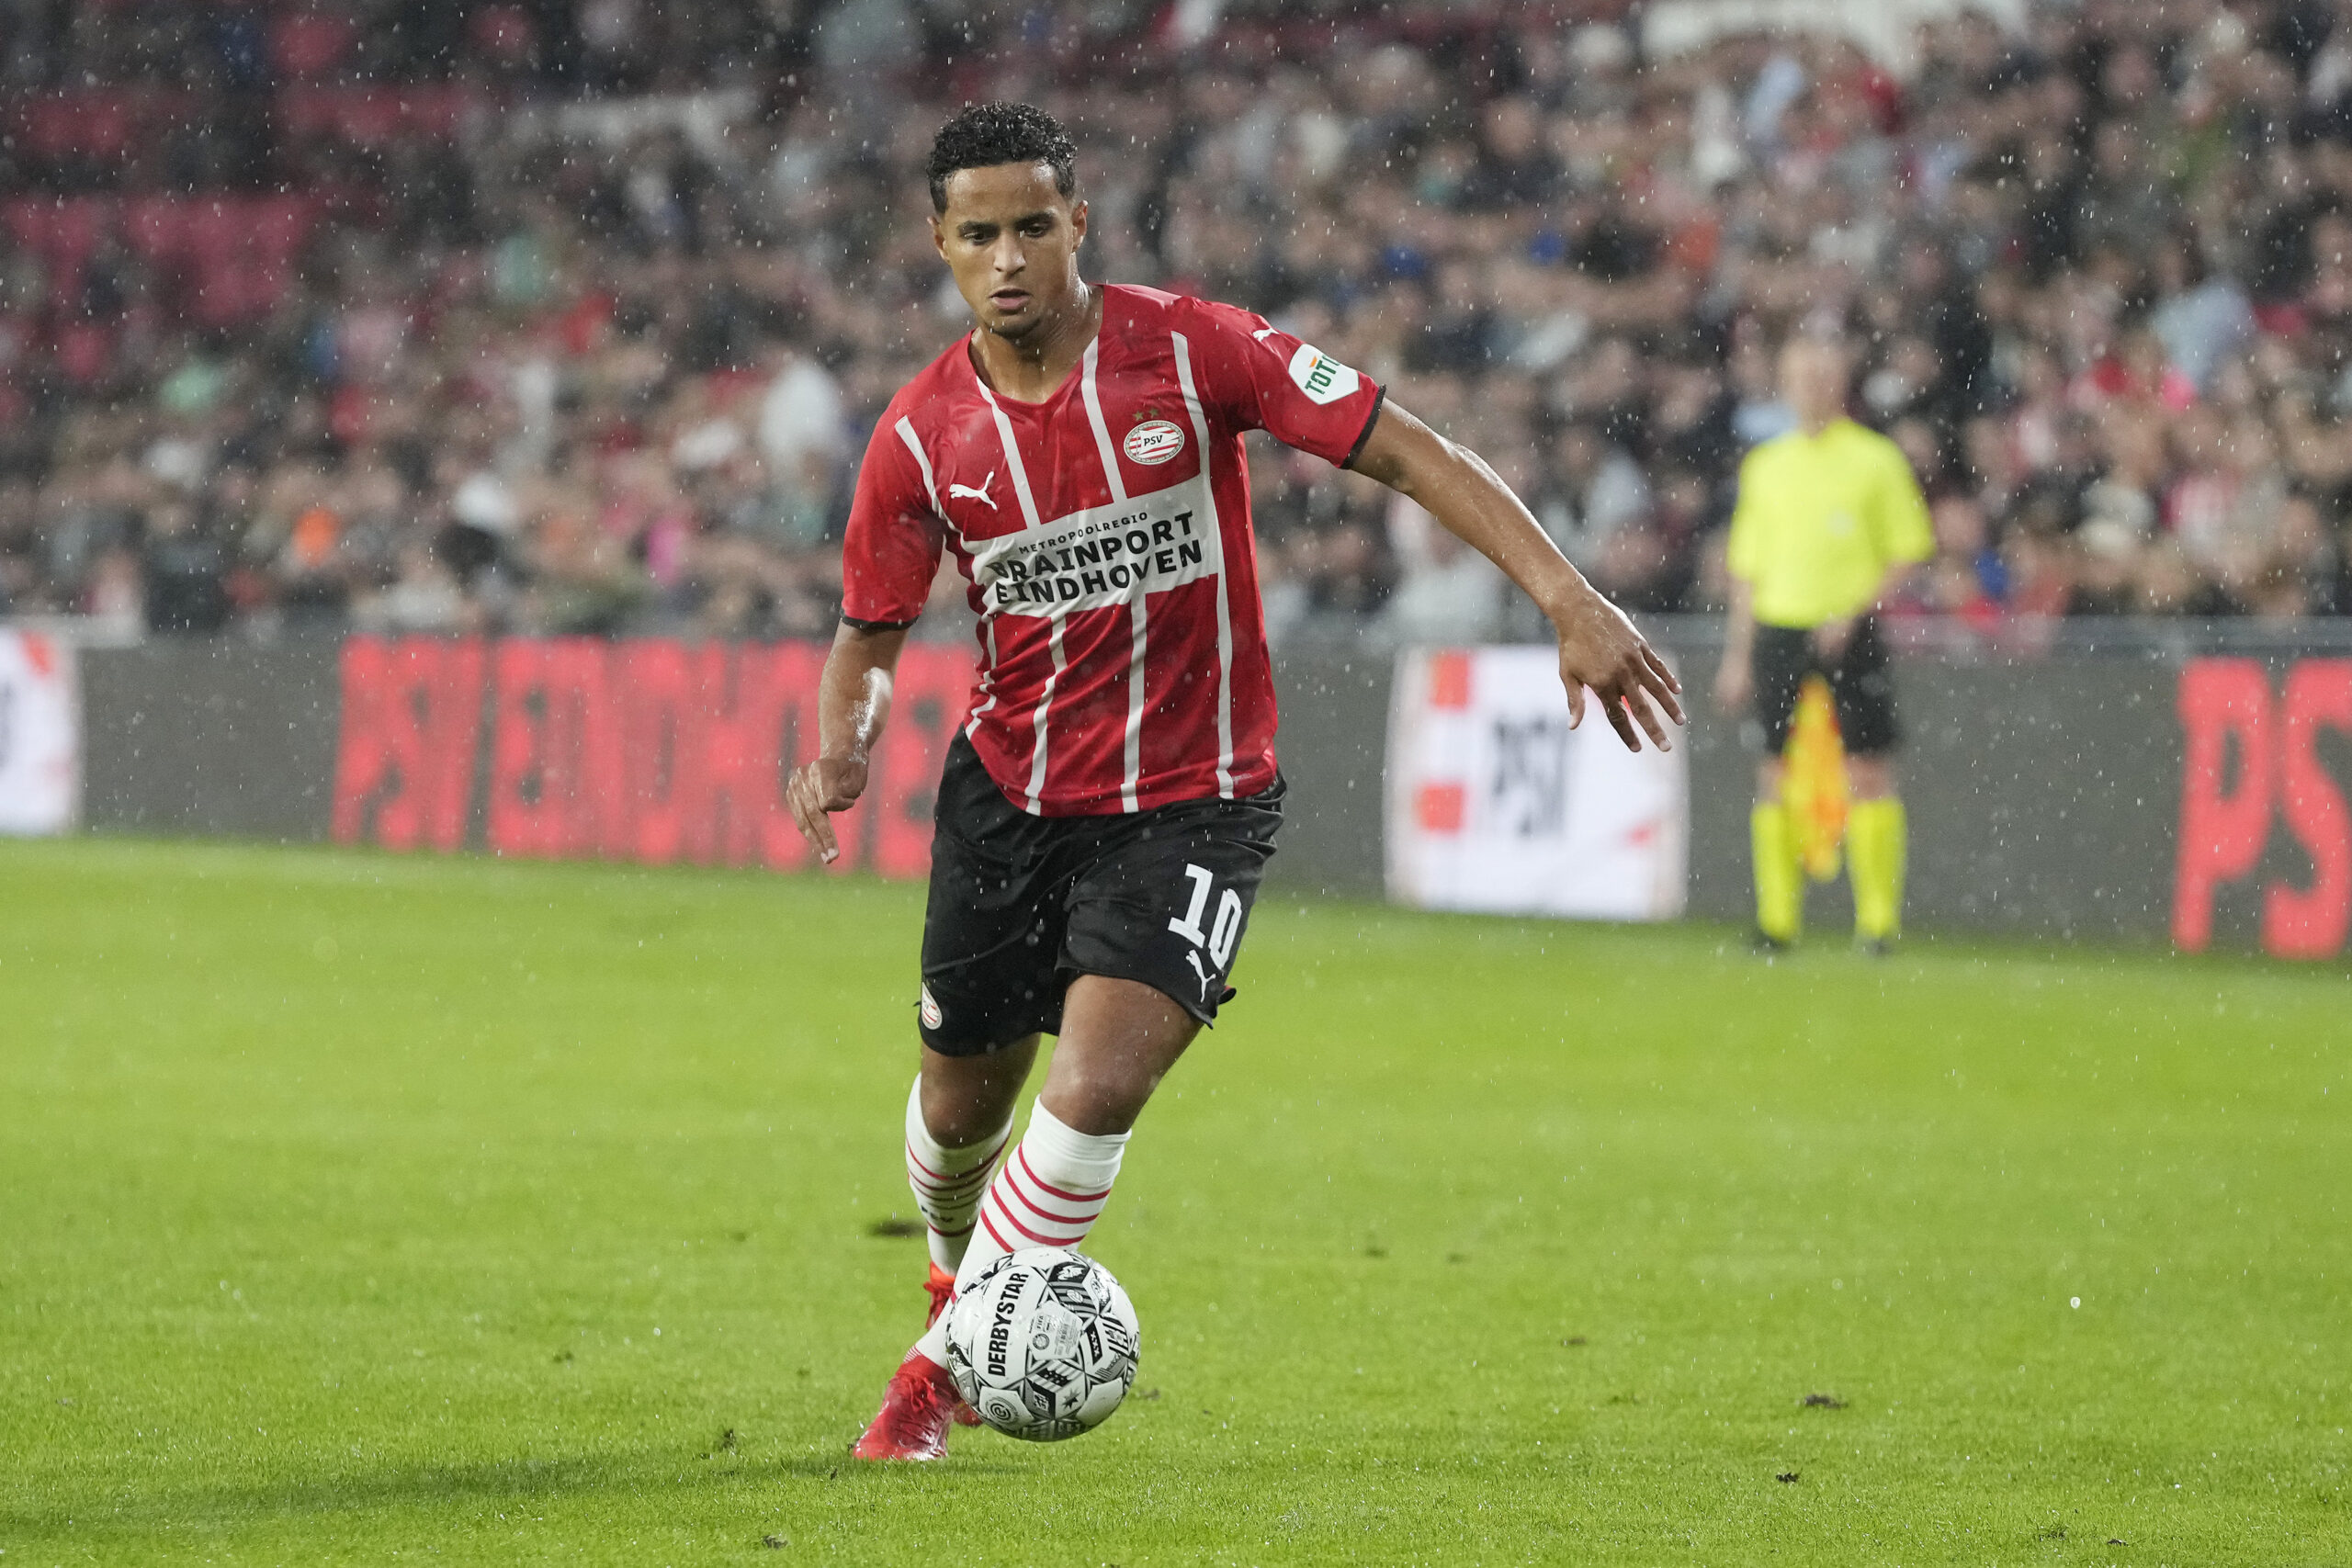 Report: Mohamed Ihattaren close to joining FC Utrecht on loan for longer period